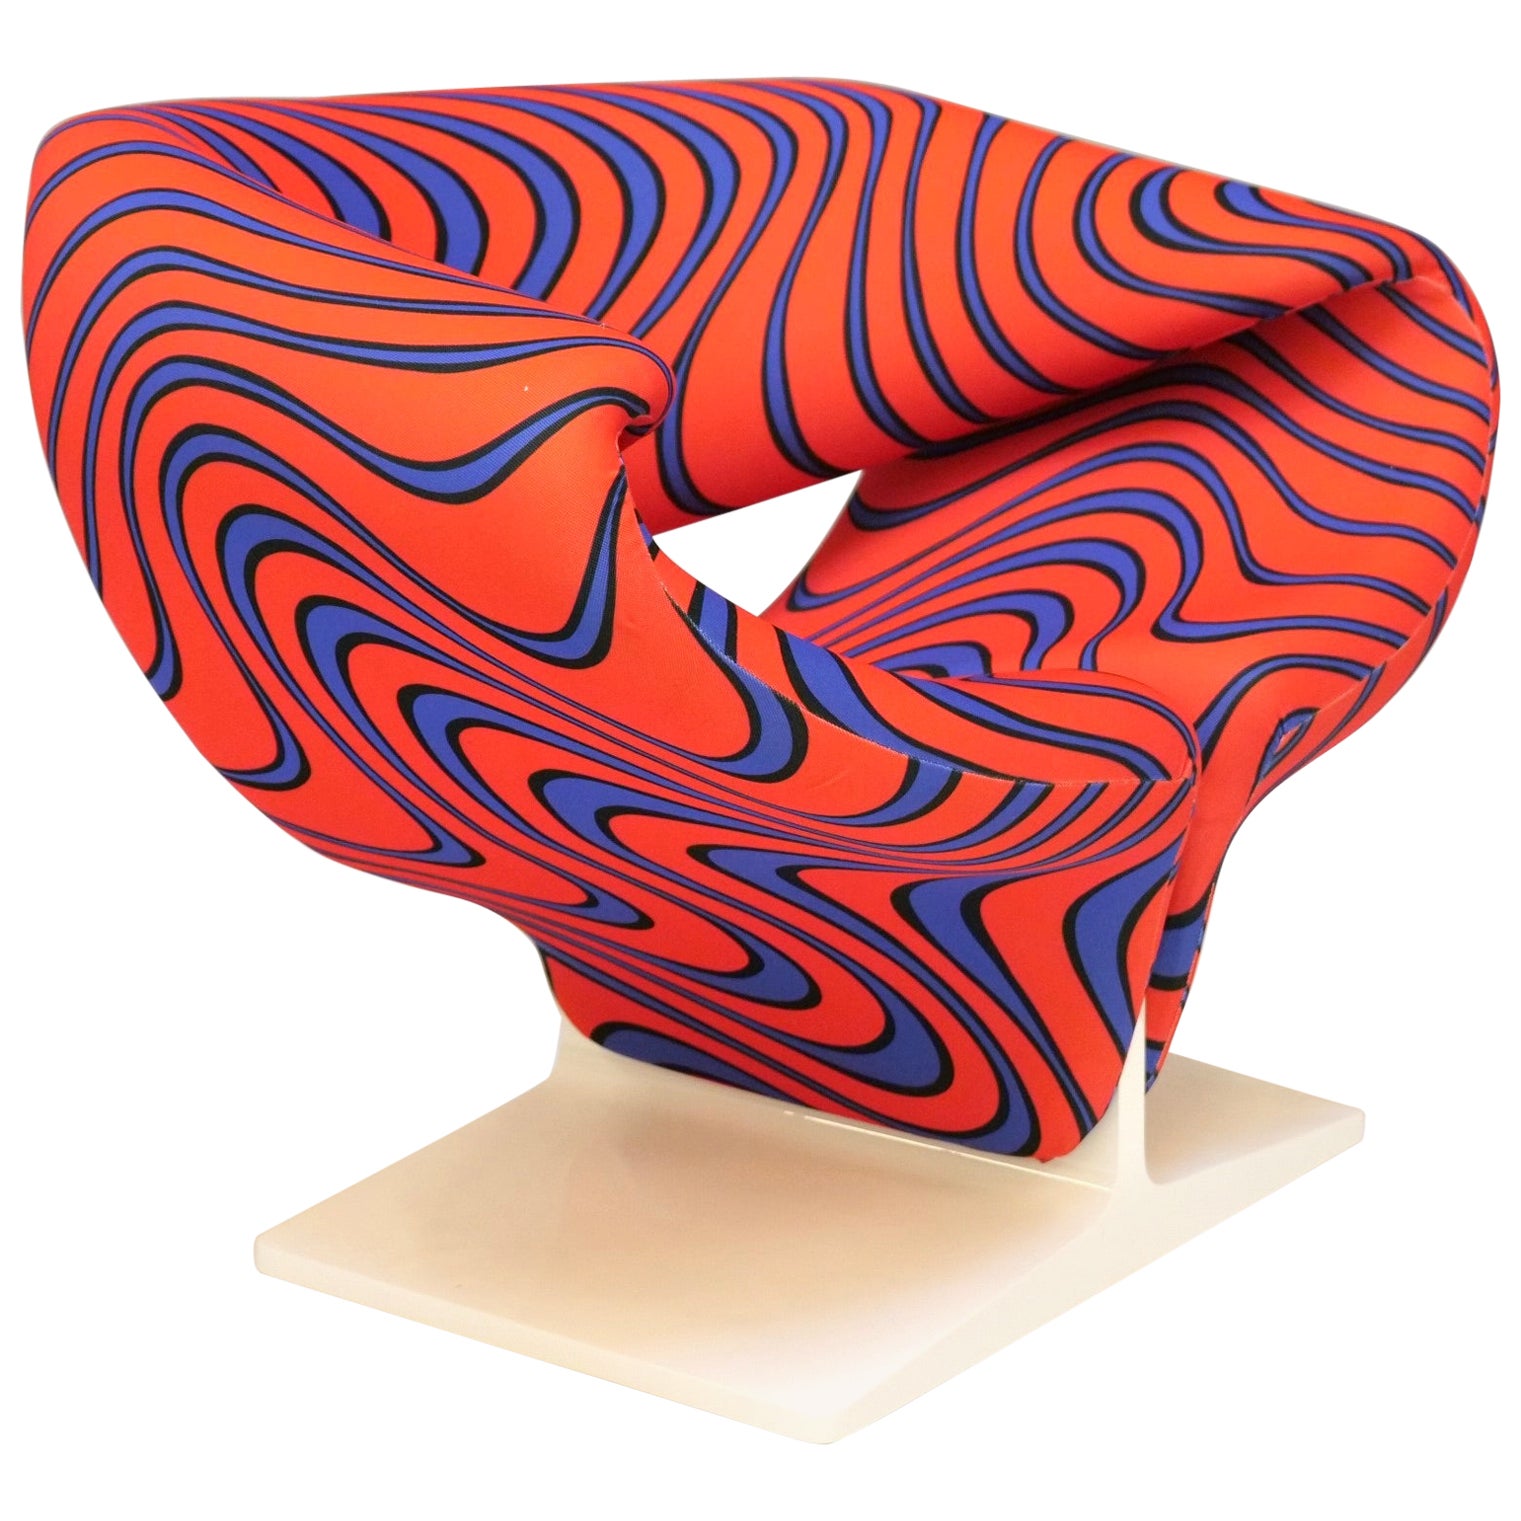 Ribbon Chair F582 by Pierre Paulin & Jack Lenor Larsen fabrics for Artifort